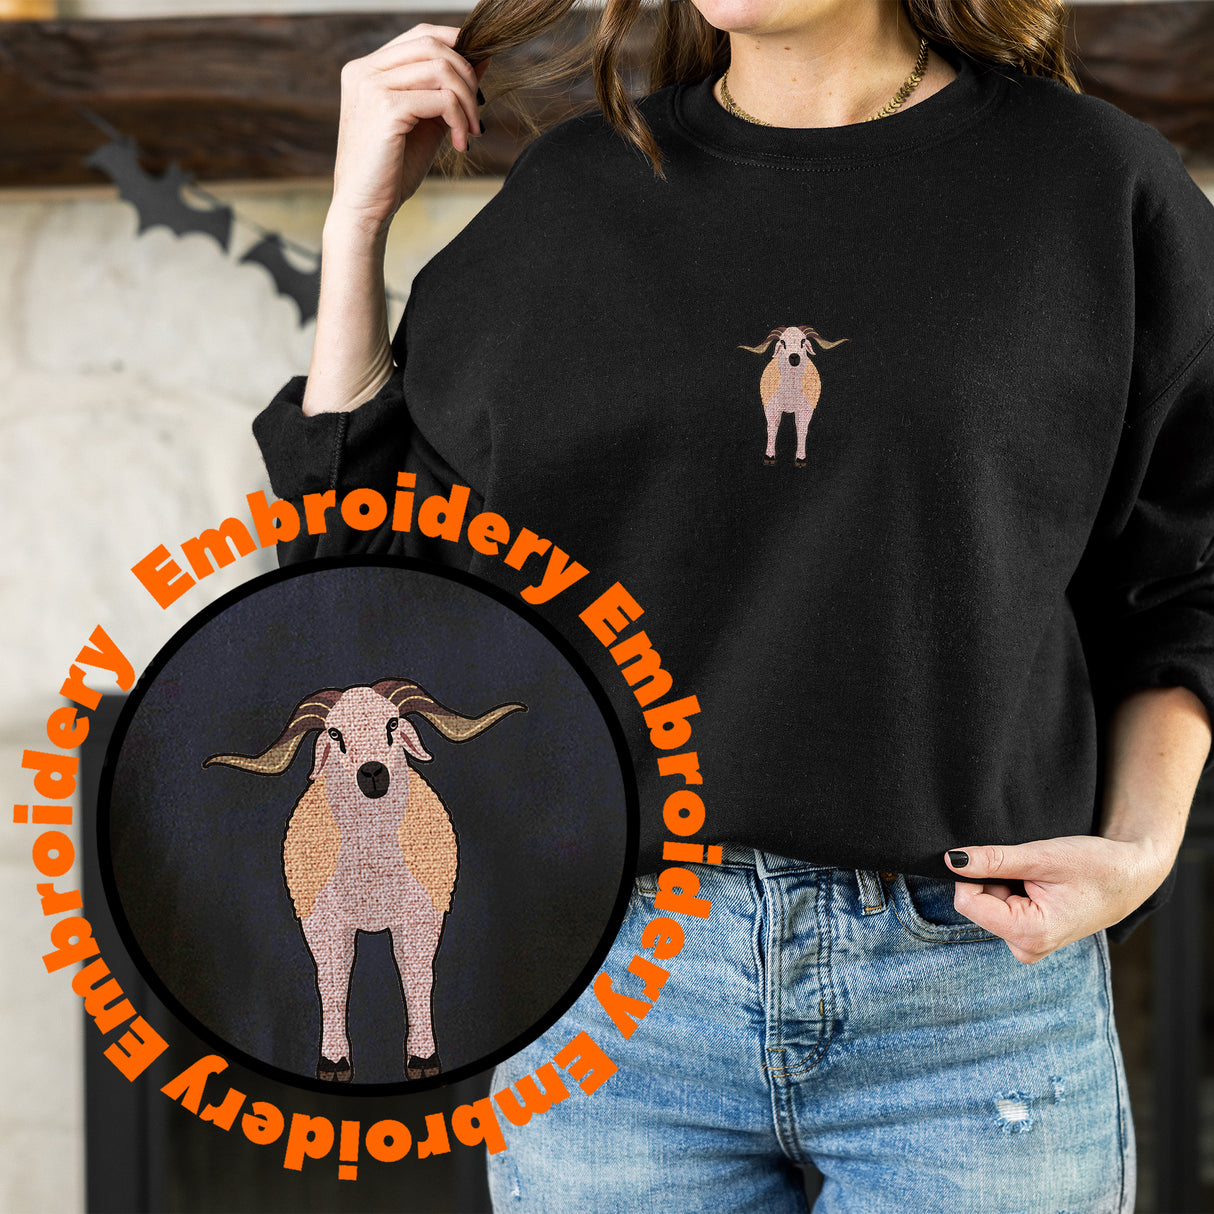 Sardi Sheep Embroidery Adult Unisex Sweatshirt